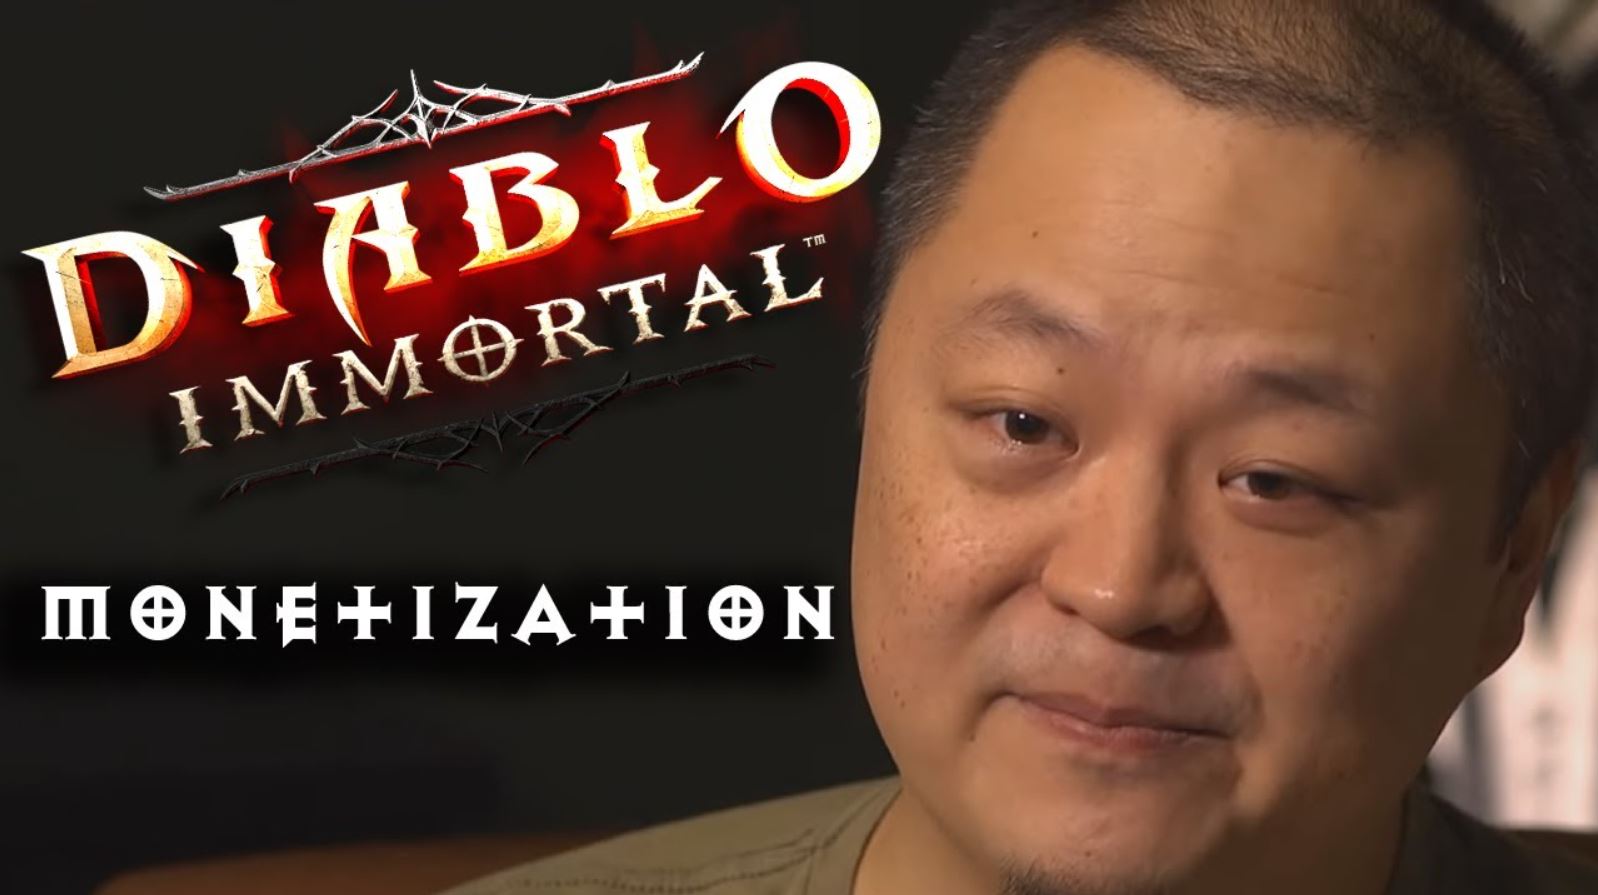 Diablo Immortal Monetization